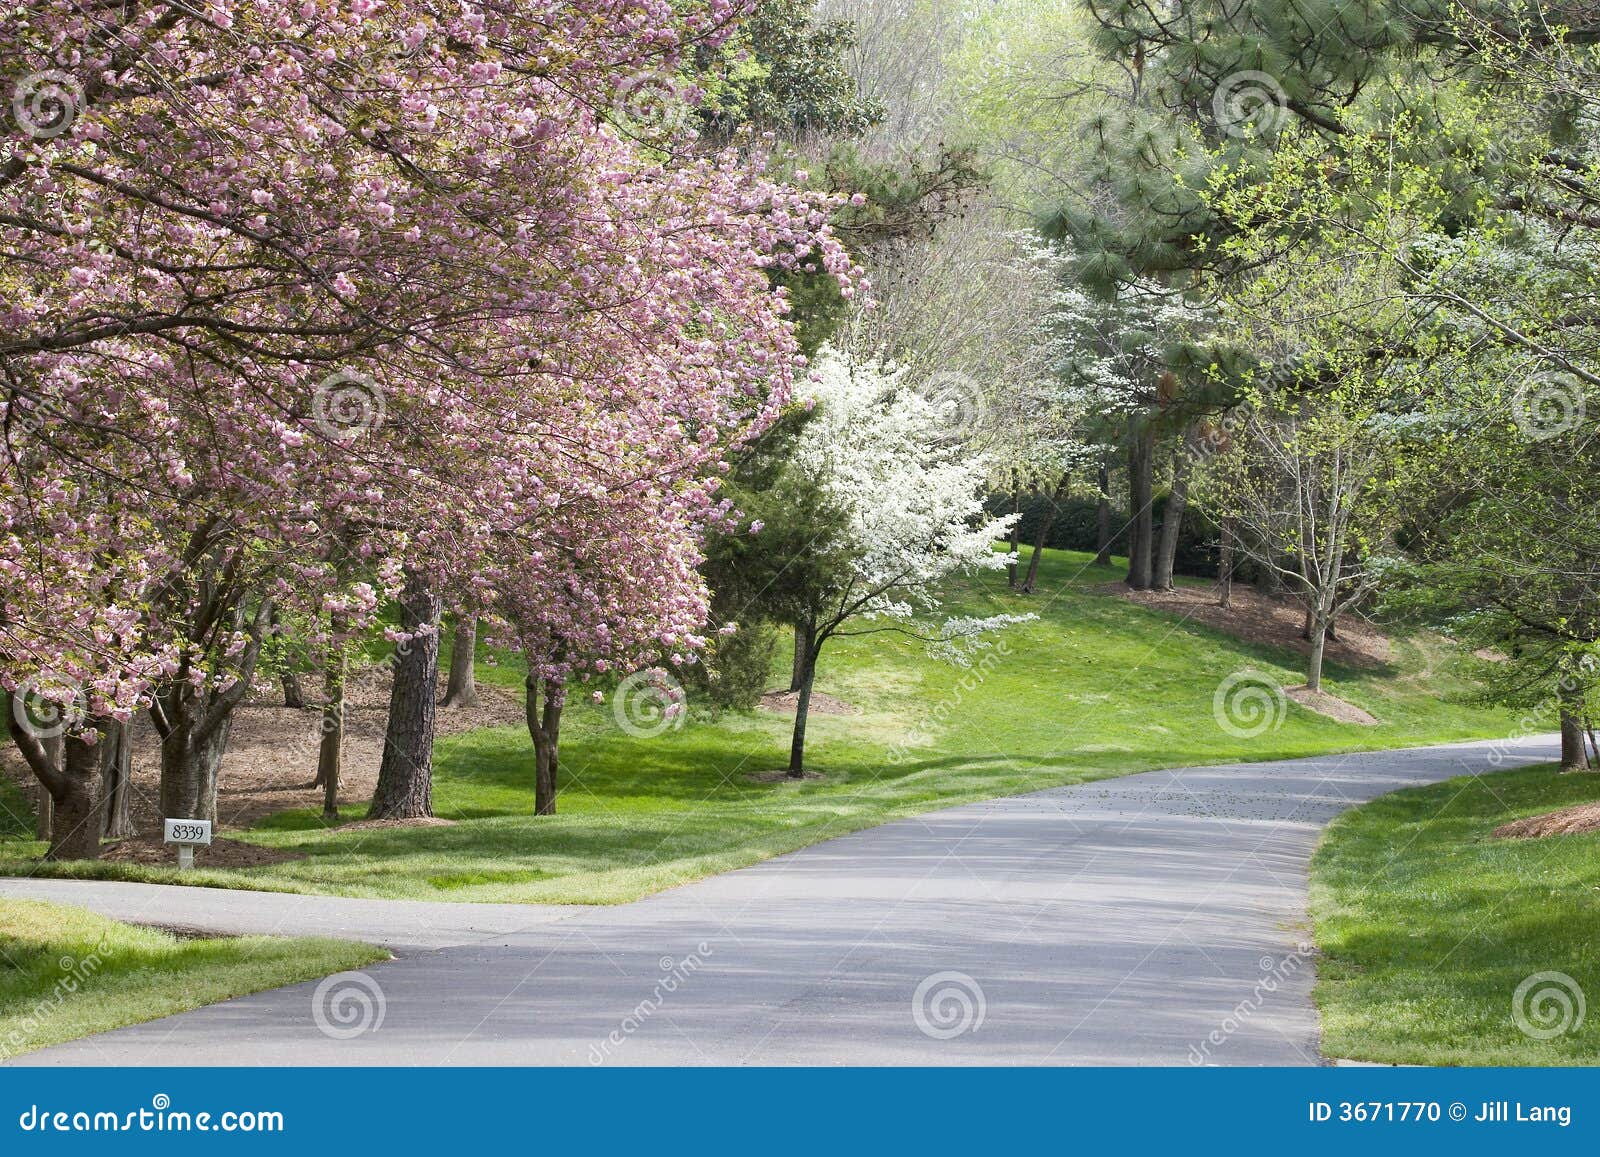 spring tree blooms